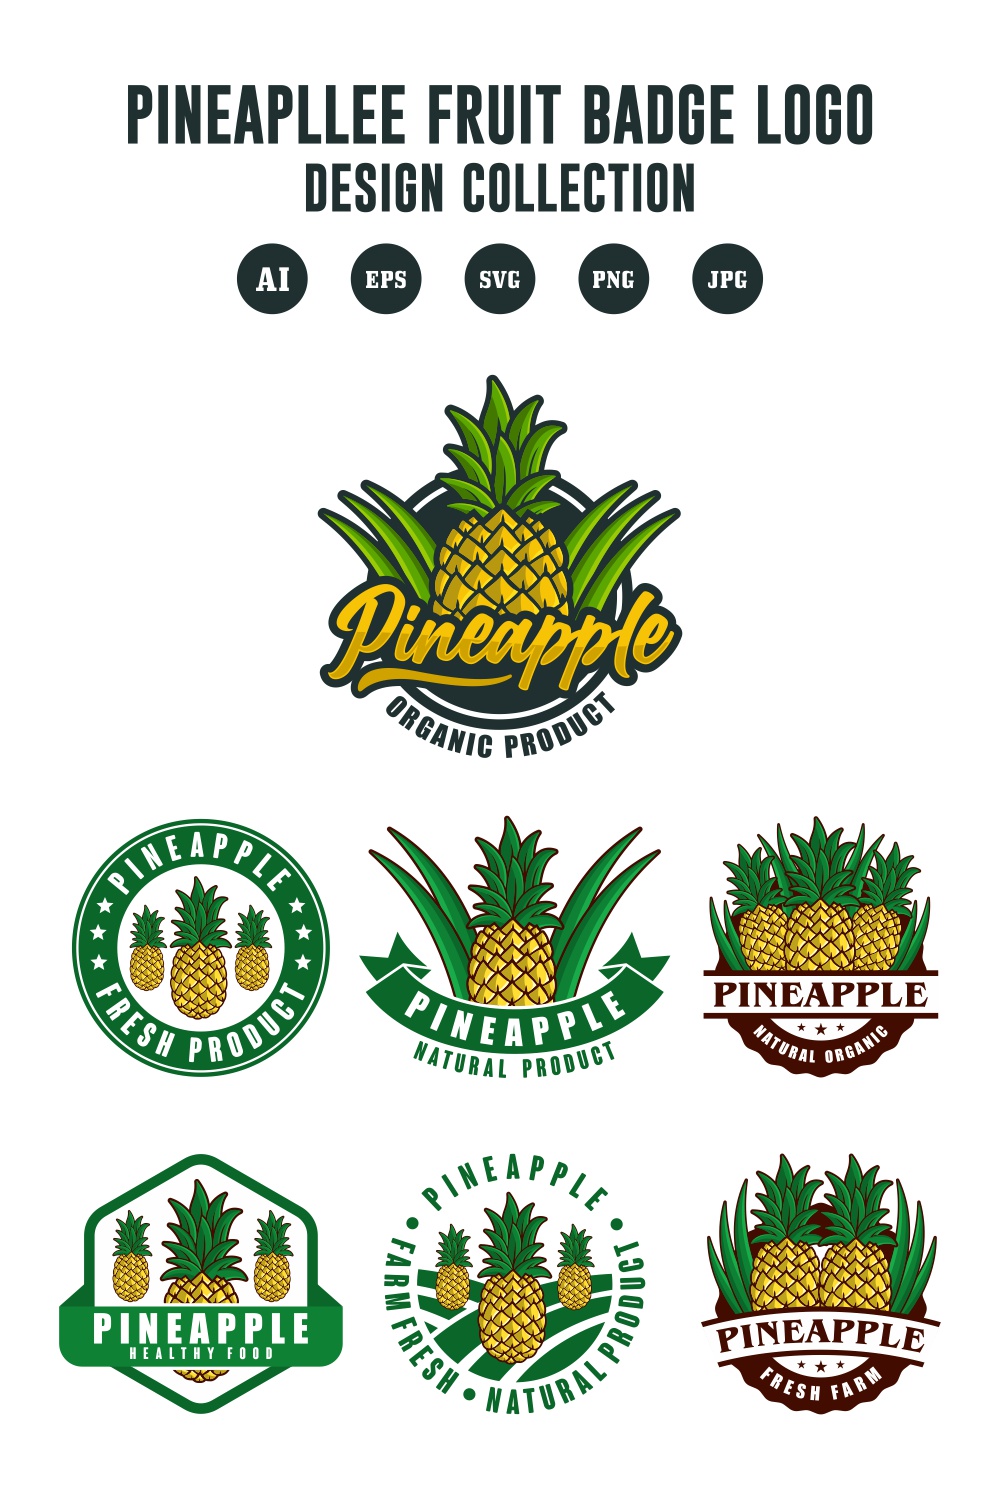 Set Pineapple badge logo design collection - $8 pinterest preview image.